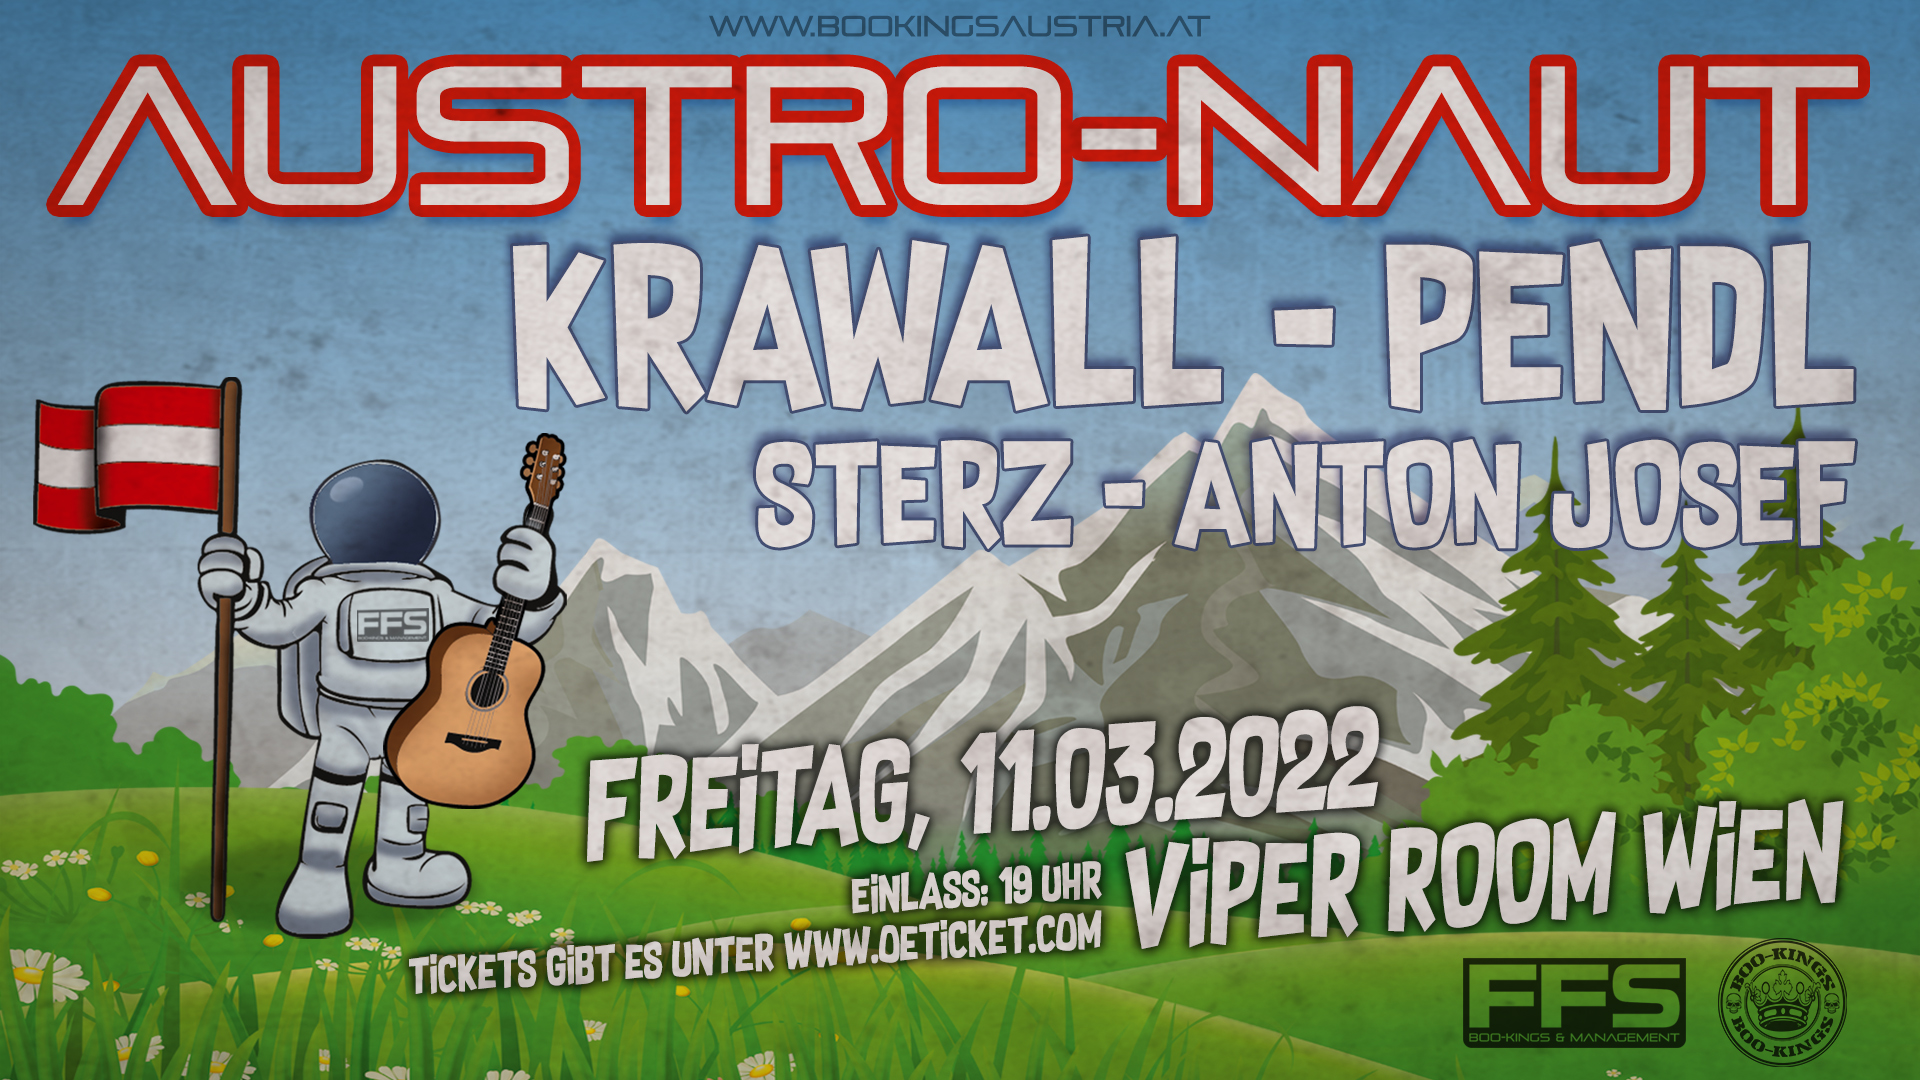 Austro-NAUT 4.0 am 11. March 2022 @ Viper Room.